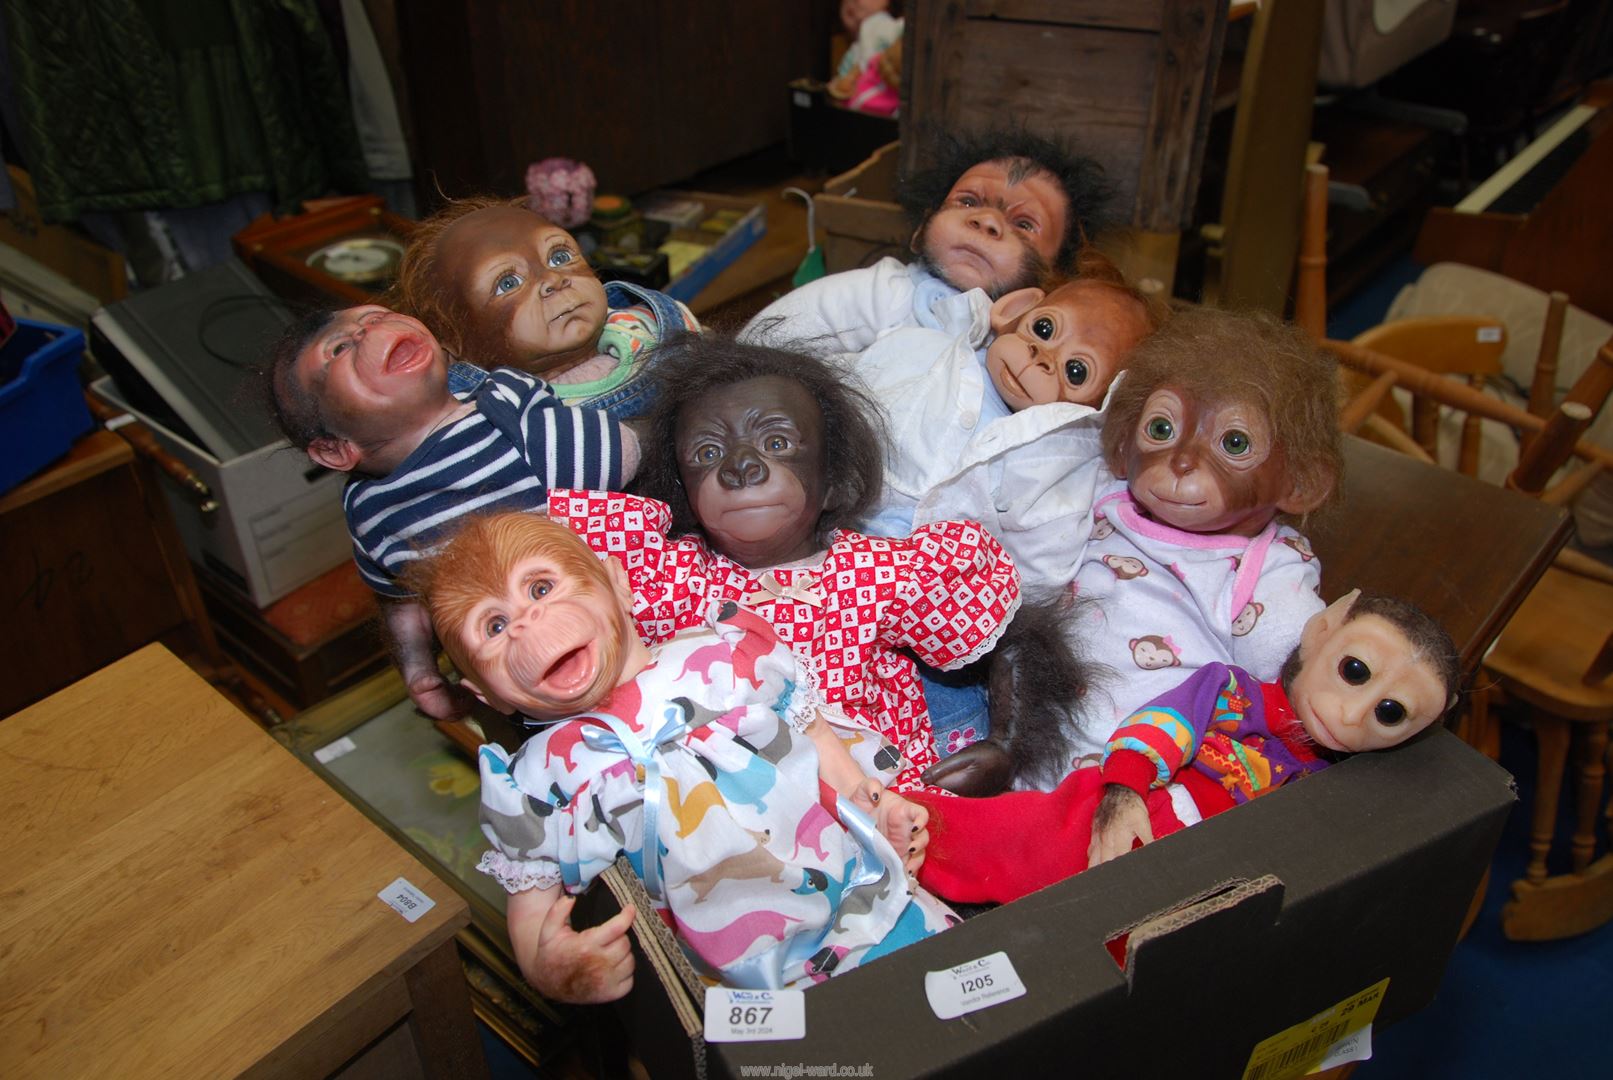 A quantity of Reborn monkey dolls.